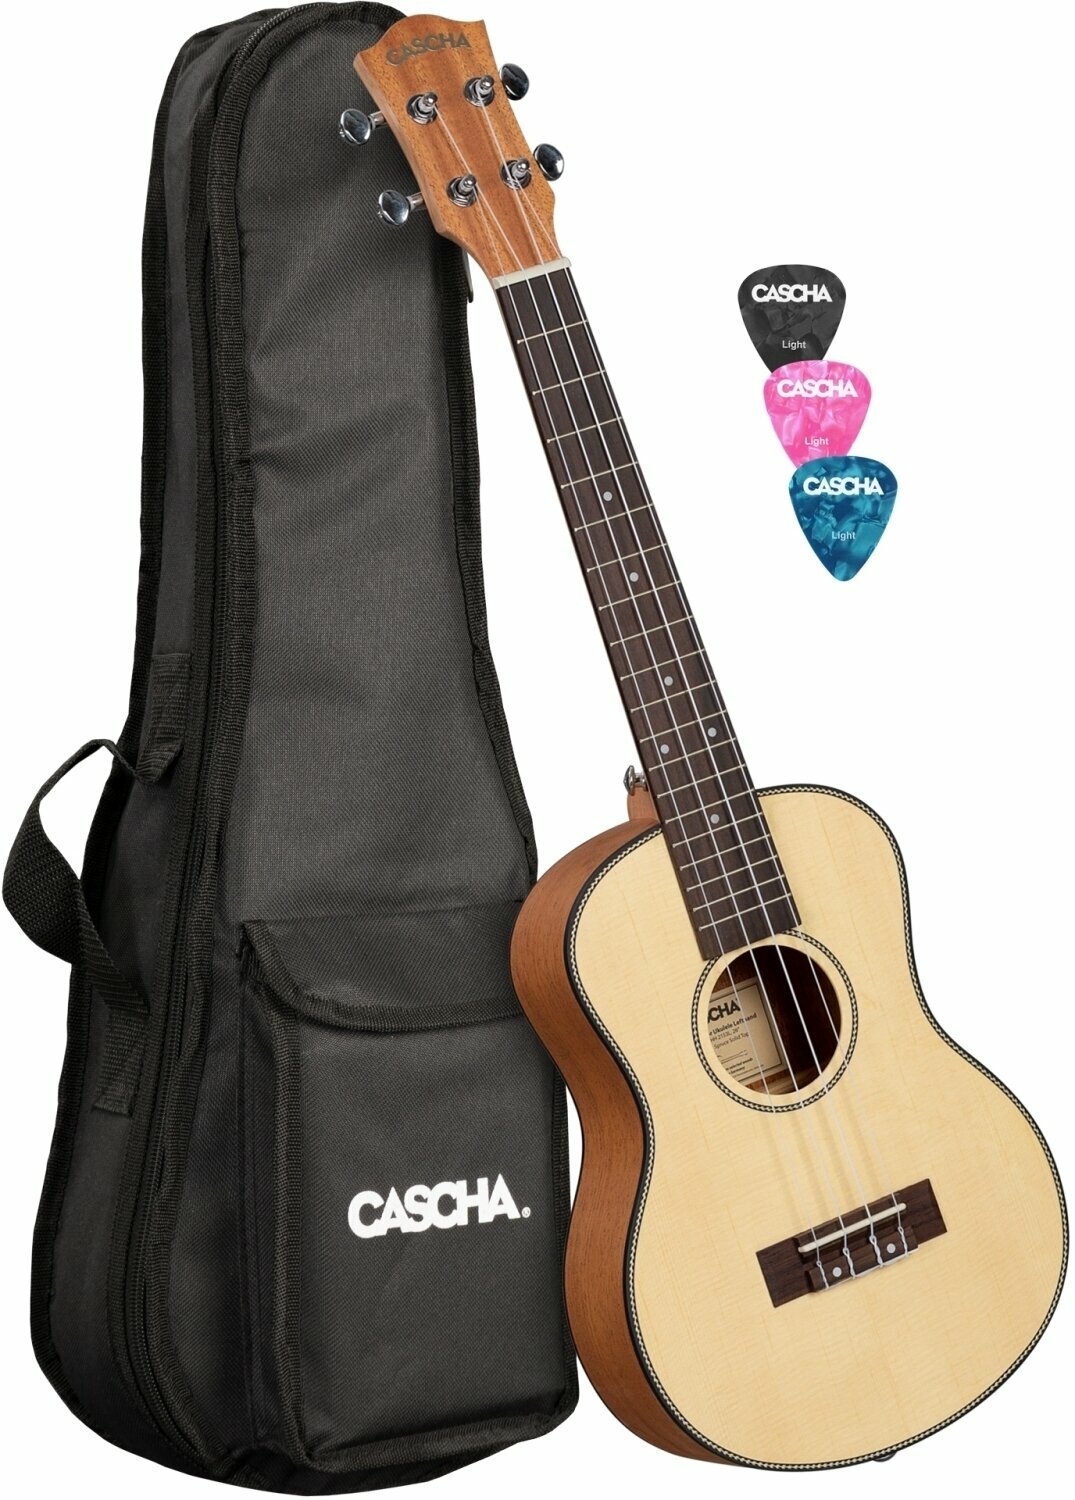 Tenori-ukulele Cascha HH 2154L Tenori-ukulele Natural